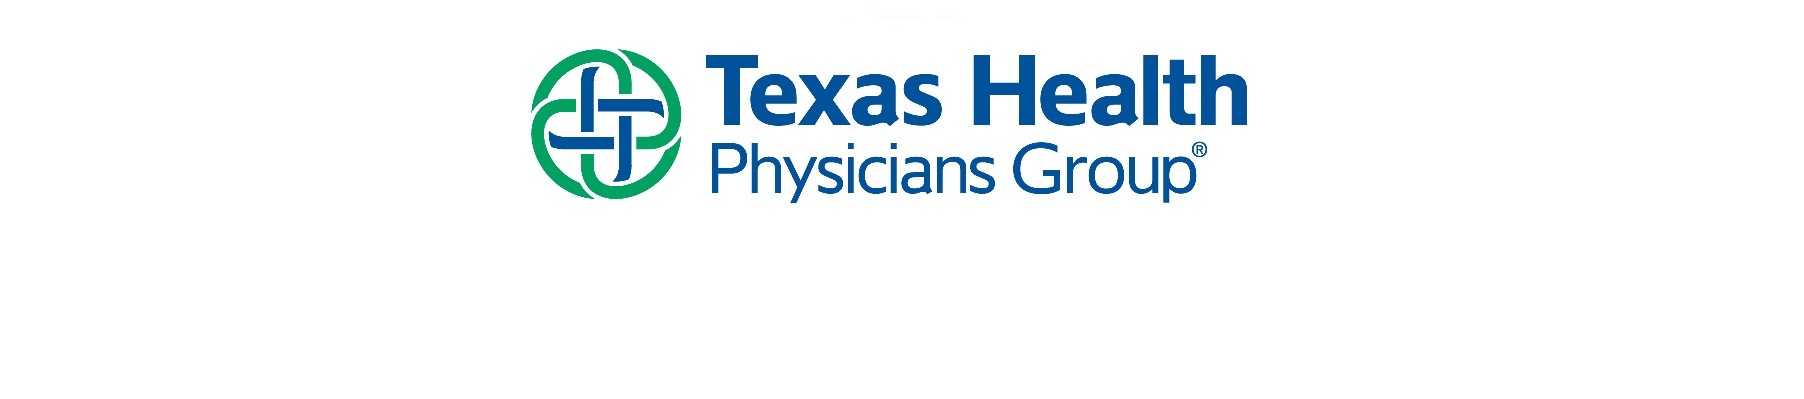 Texas Health Physicians Group Shield